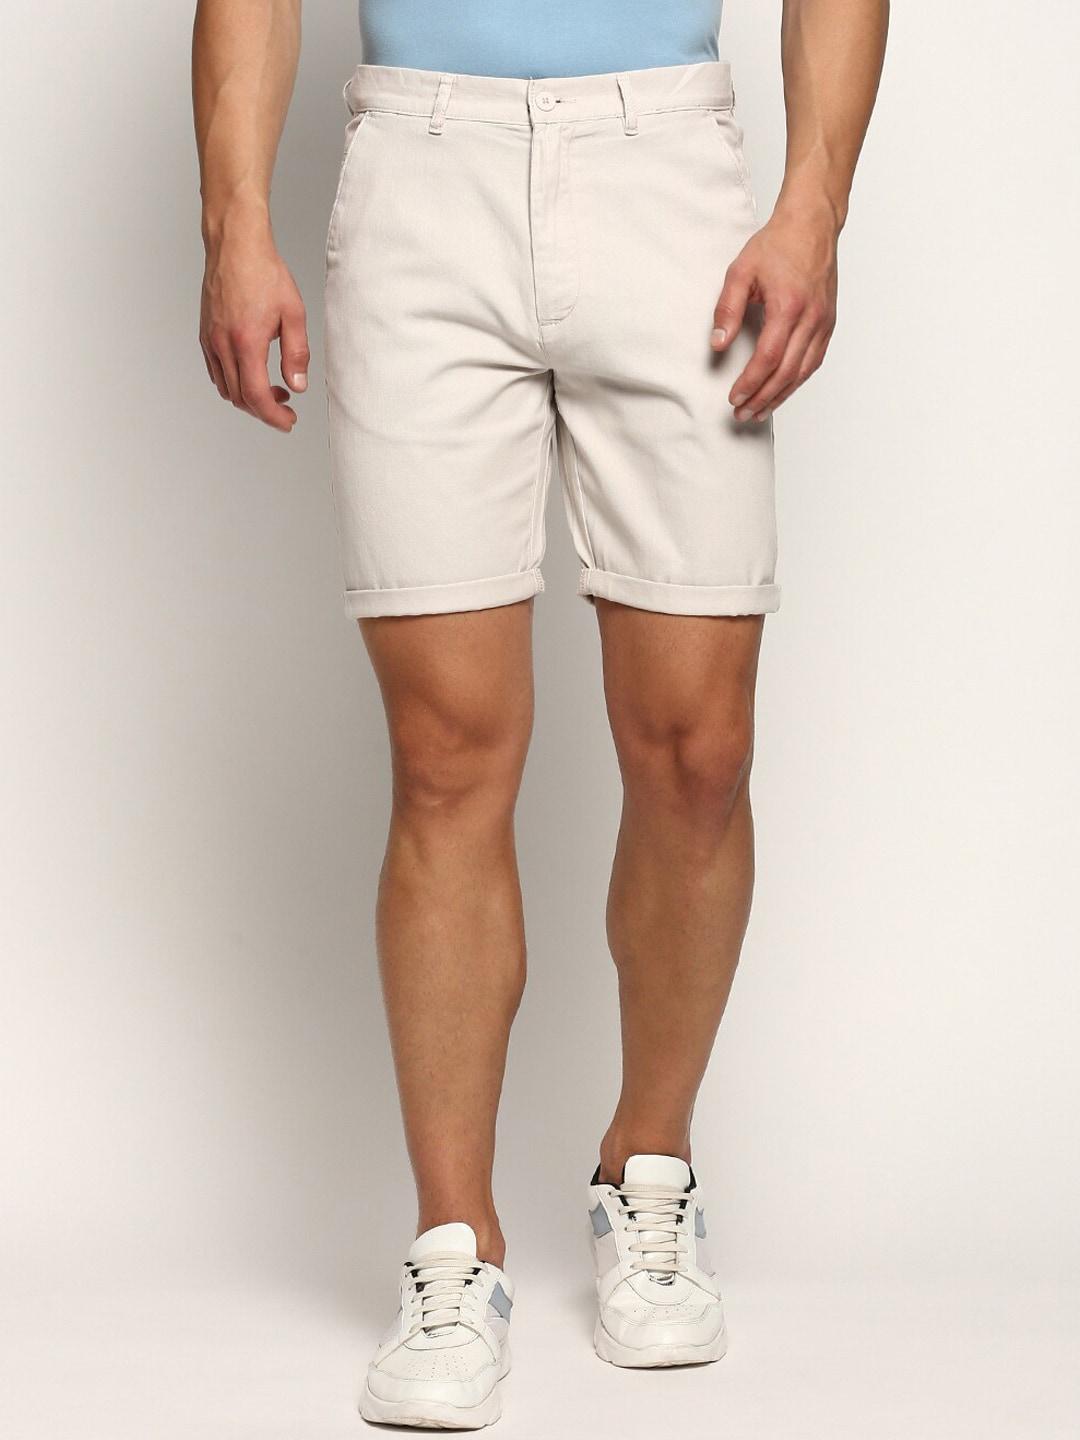 showoff-men-mid-raise-cotton-chino-shorts